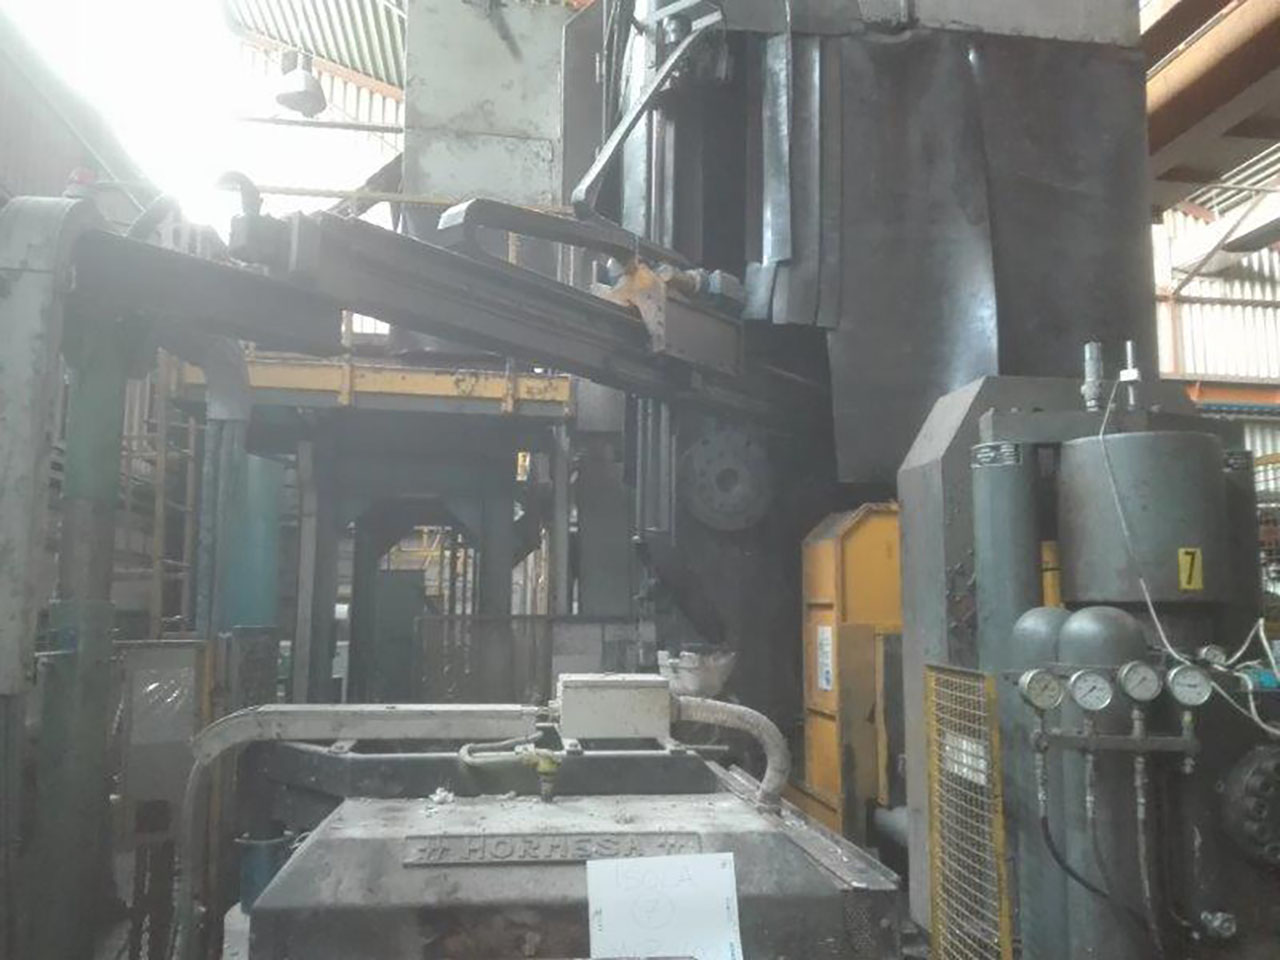 MPG TST 1600 cold chamber die casting machine KK1399, used